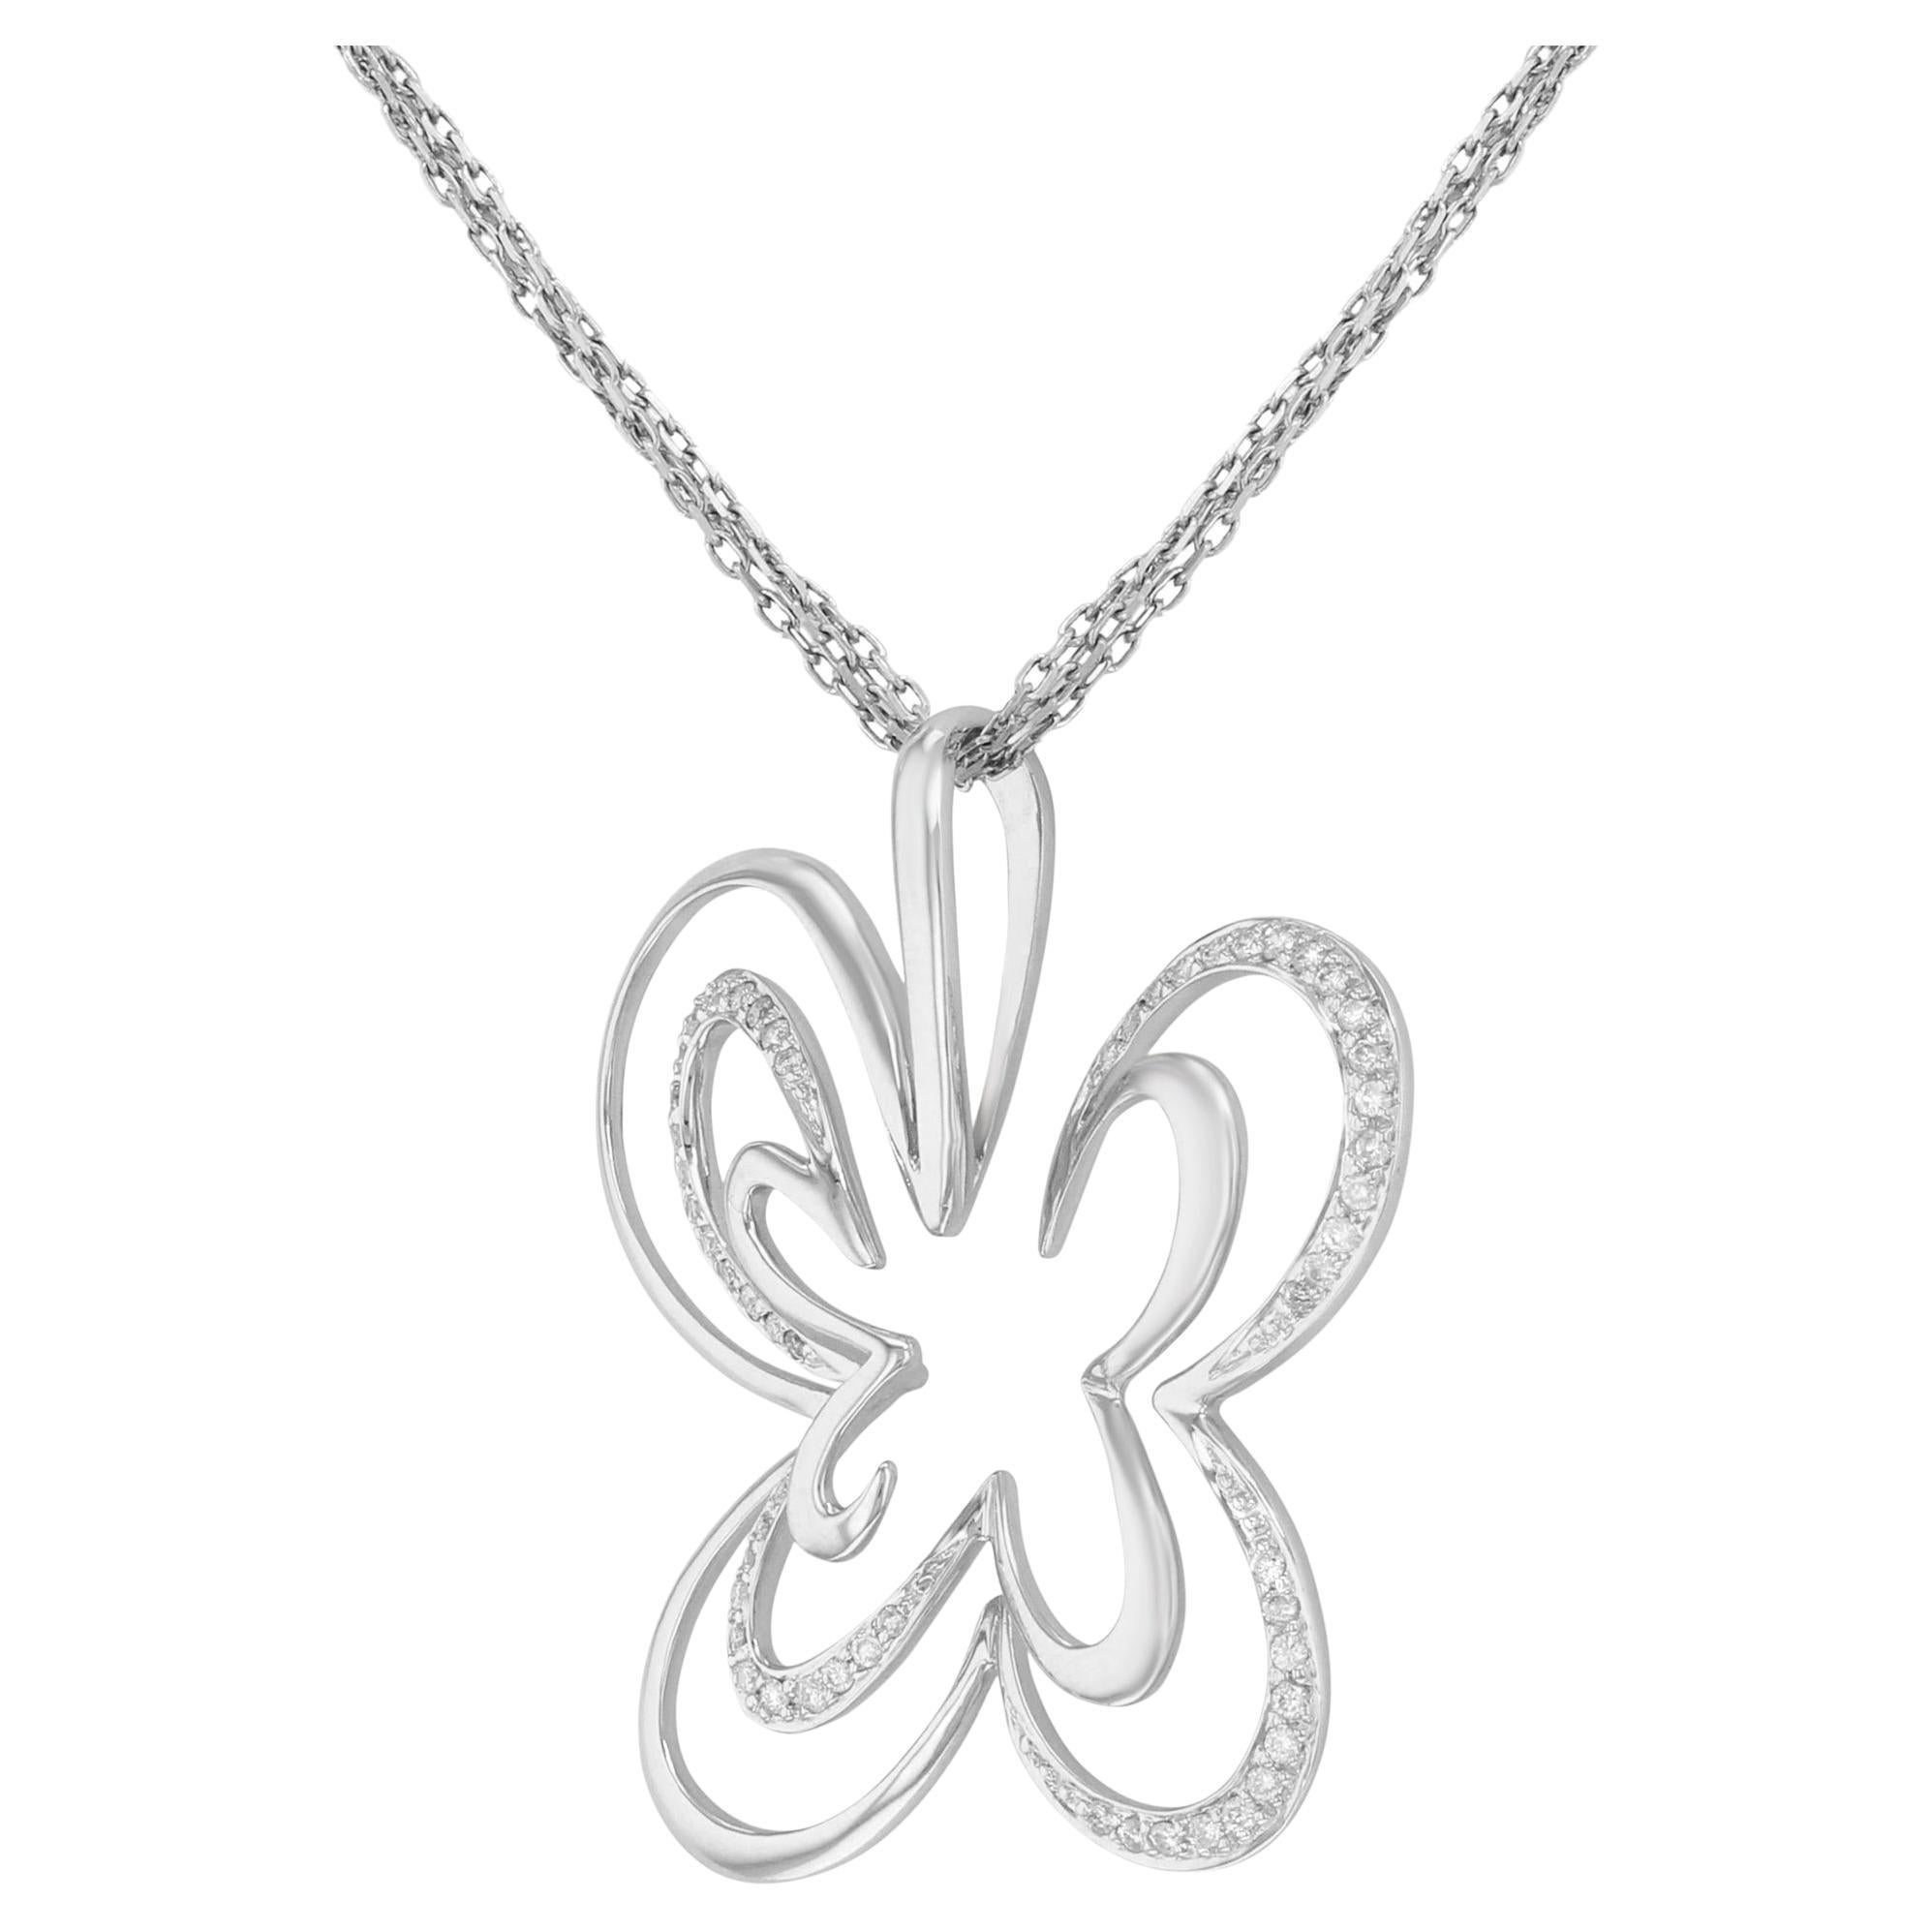 Saya Diamond Pendant Ladies Necklace 18K White Gold 0.20cttw For Sale